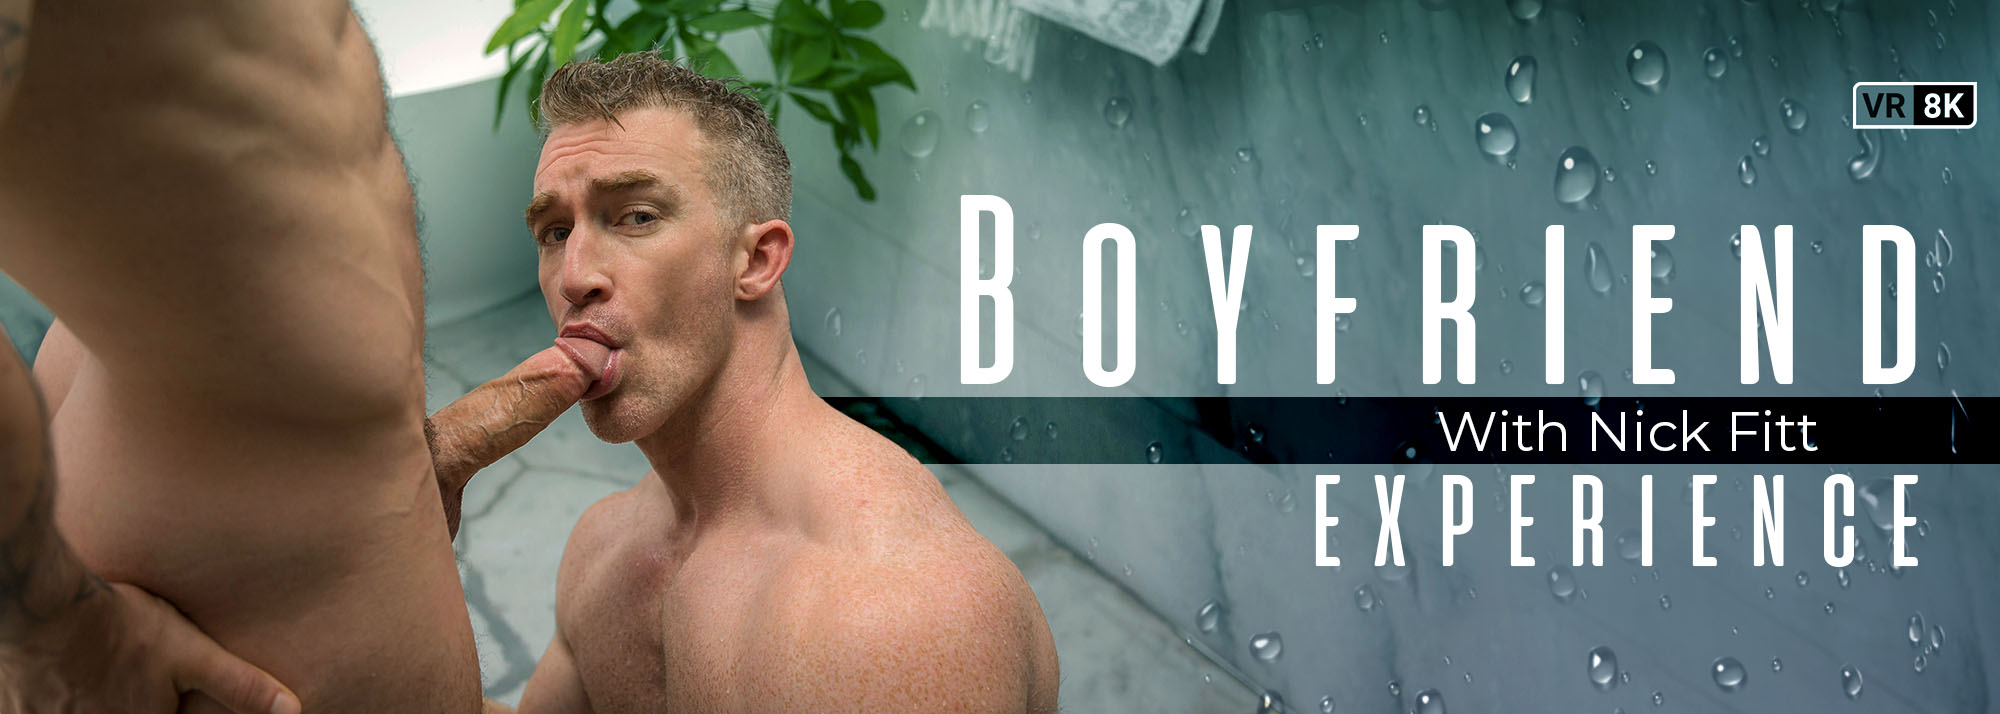 Boyfriend Experience With Nick Fitt - VR Porn Video, Starring: Nick Fitt VR